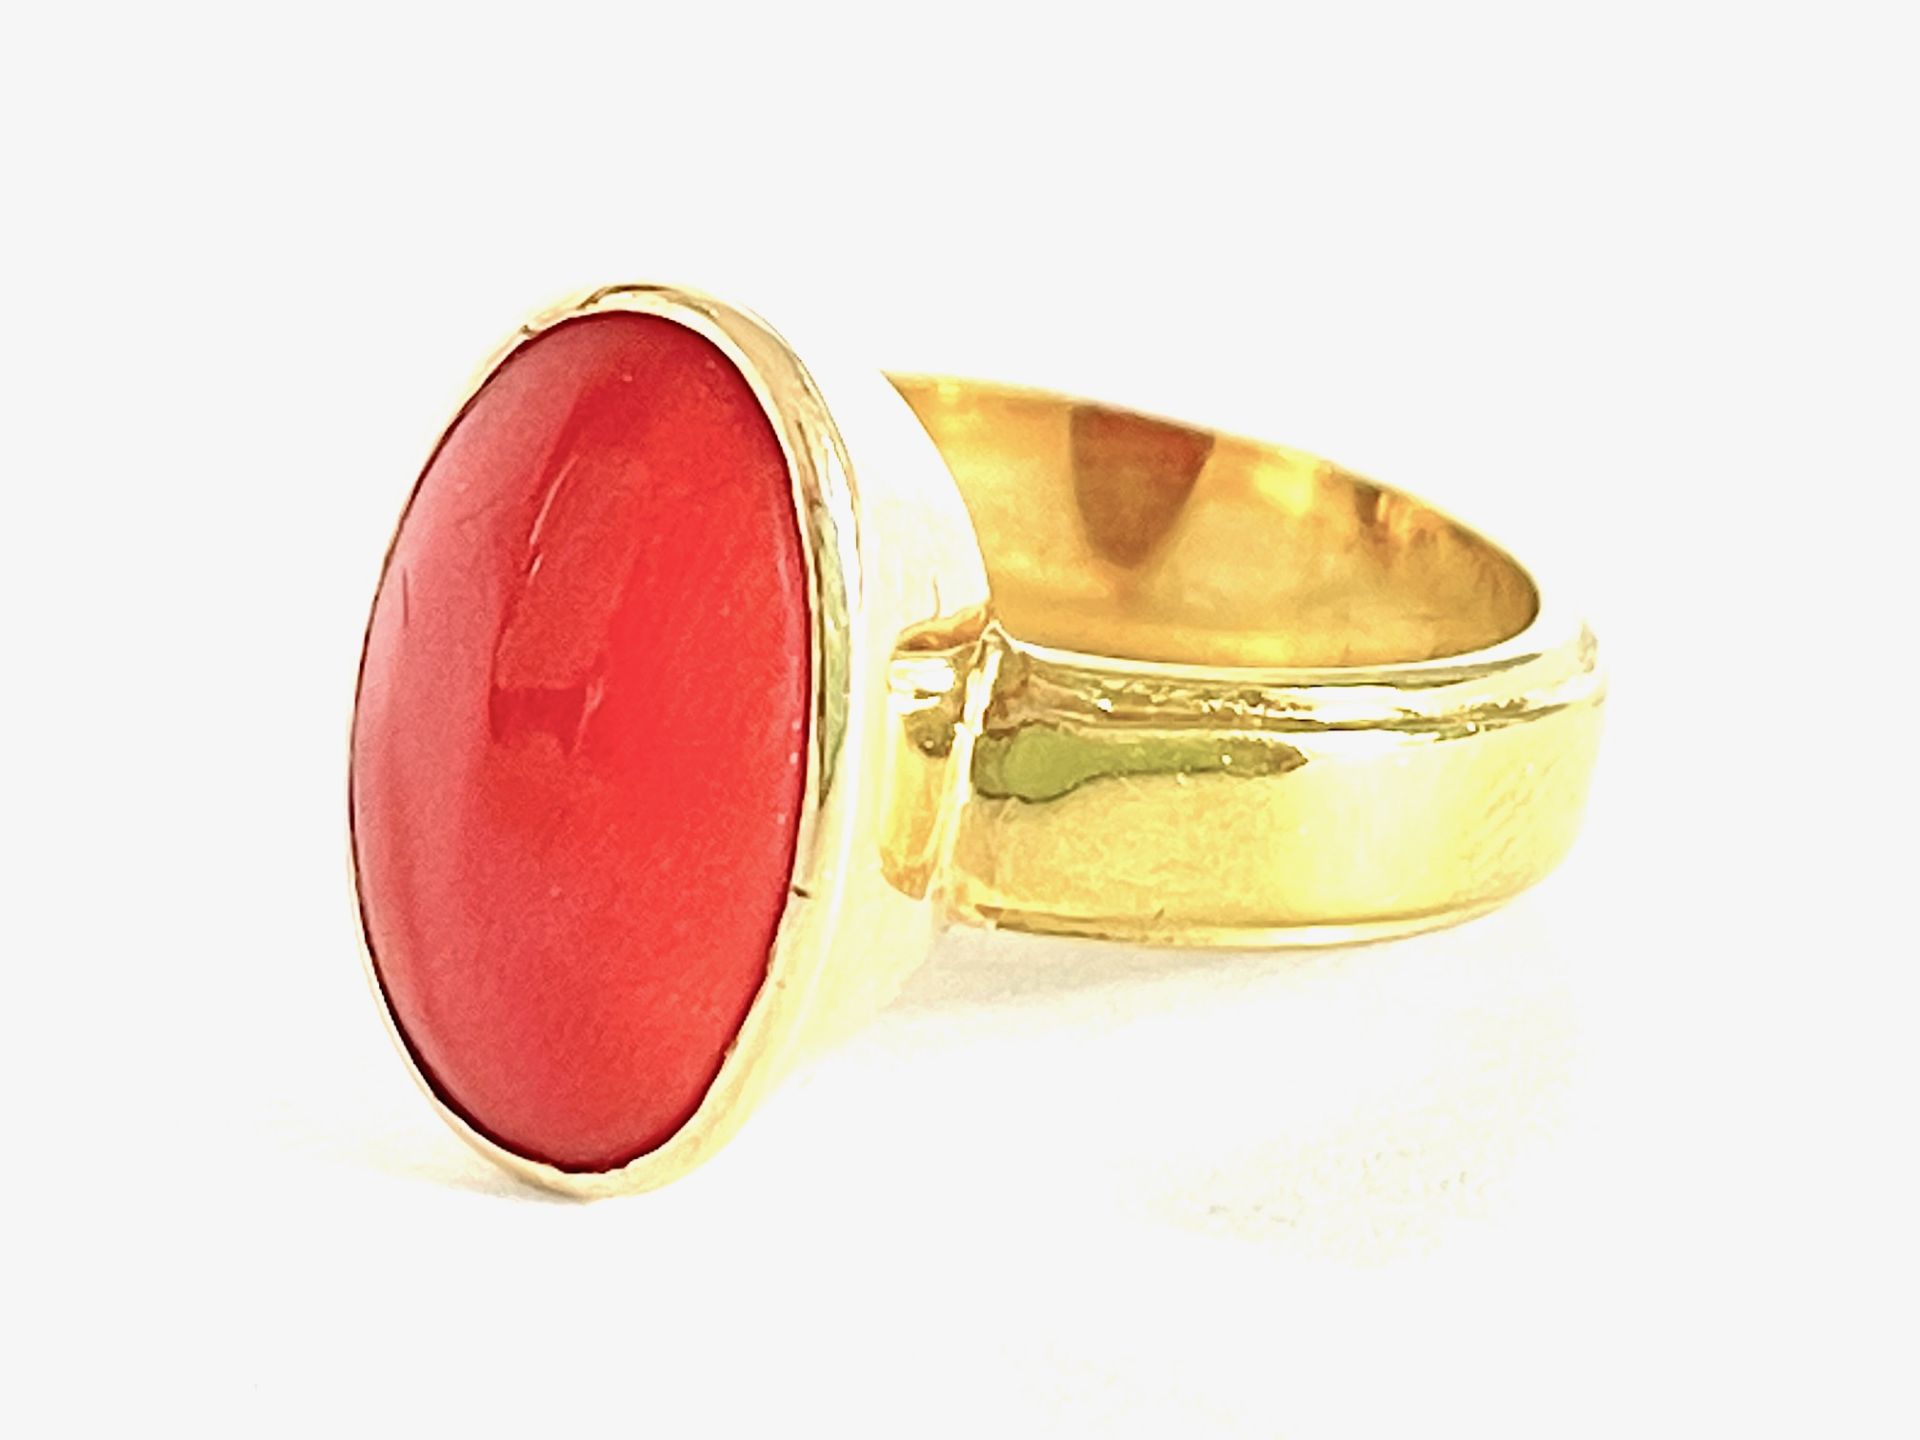 Ring - Image 2 of 5